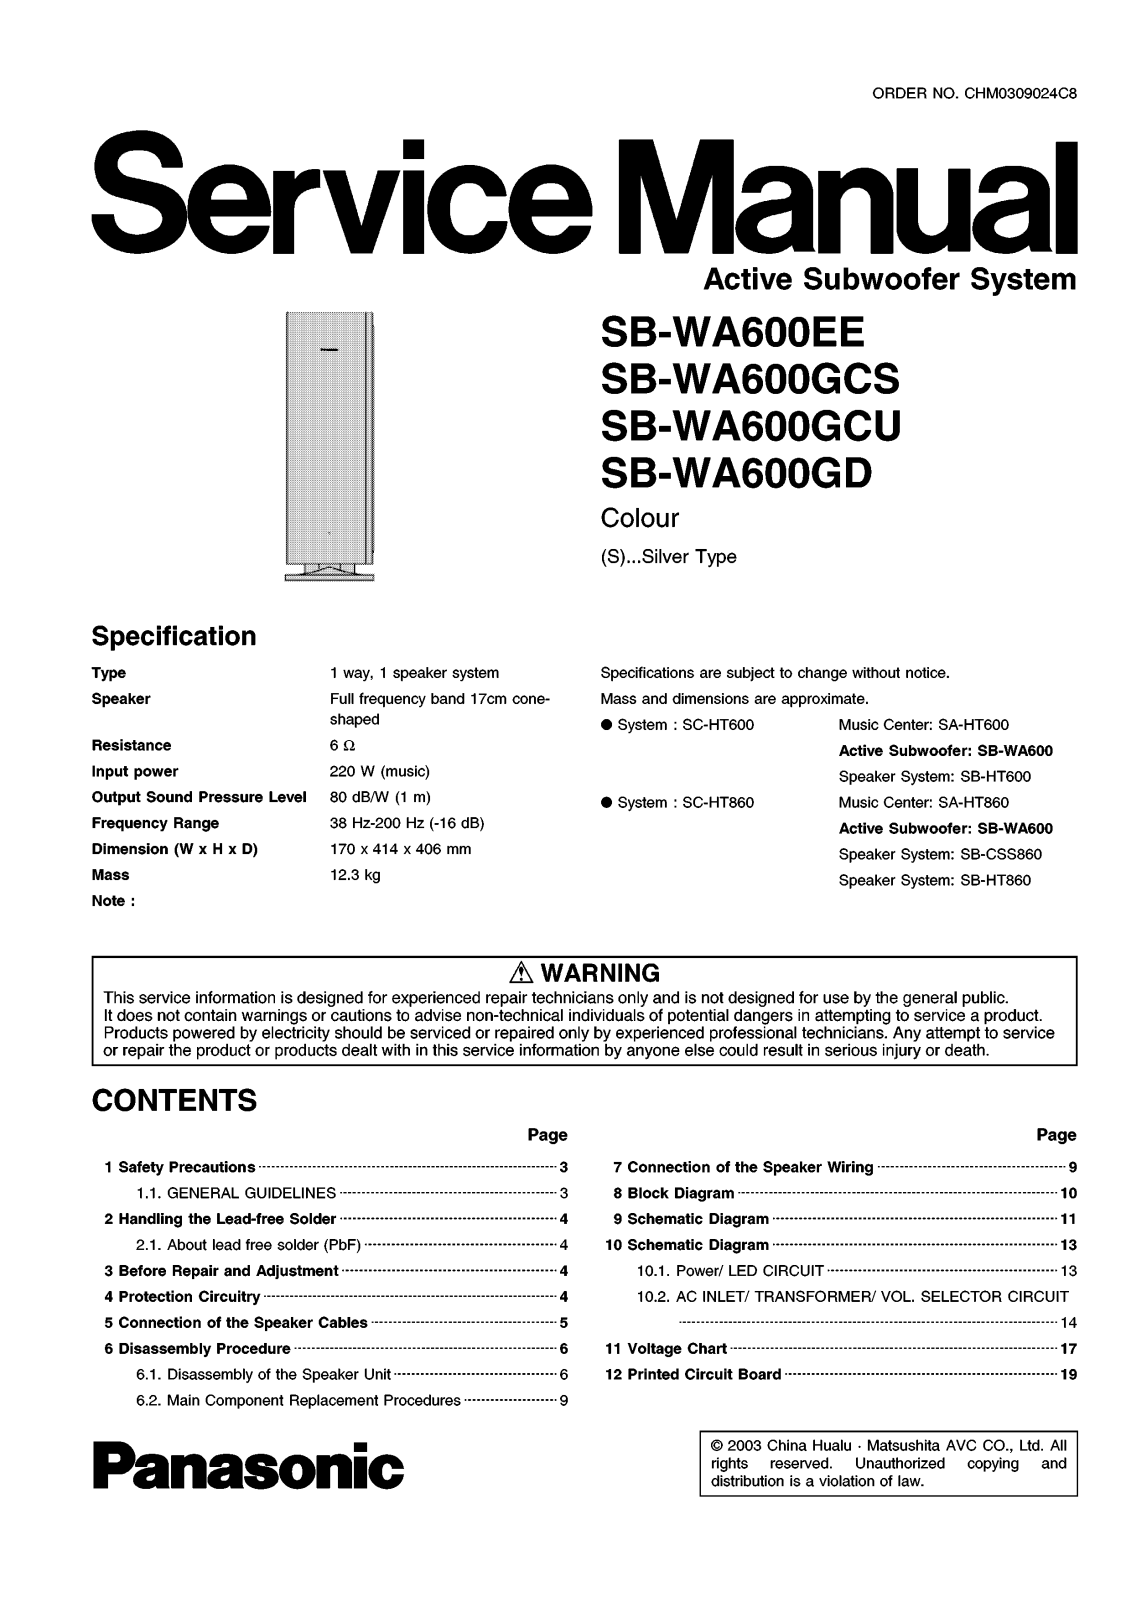 Panasonic SBWA-600-EE, SBWA-600-GCS, SBWA-600-GD, SBWA-600-GCU Service manual